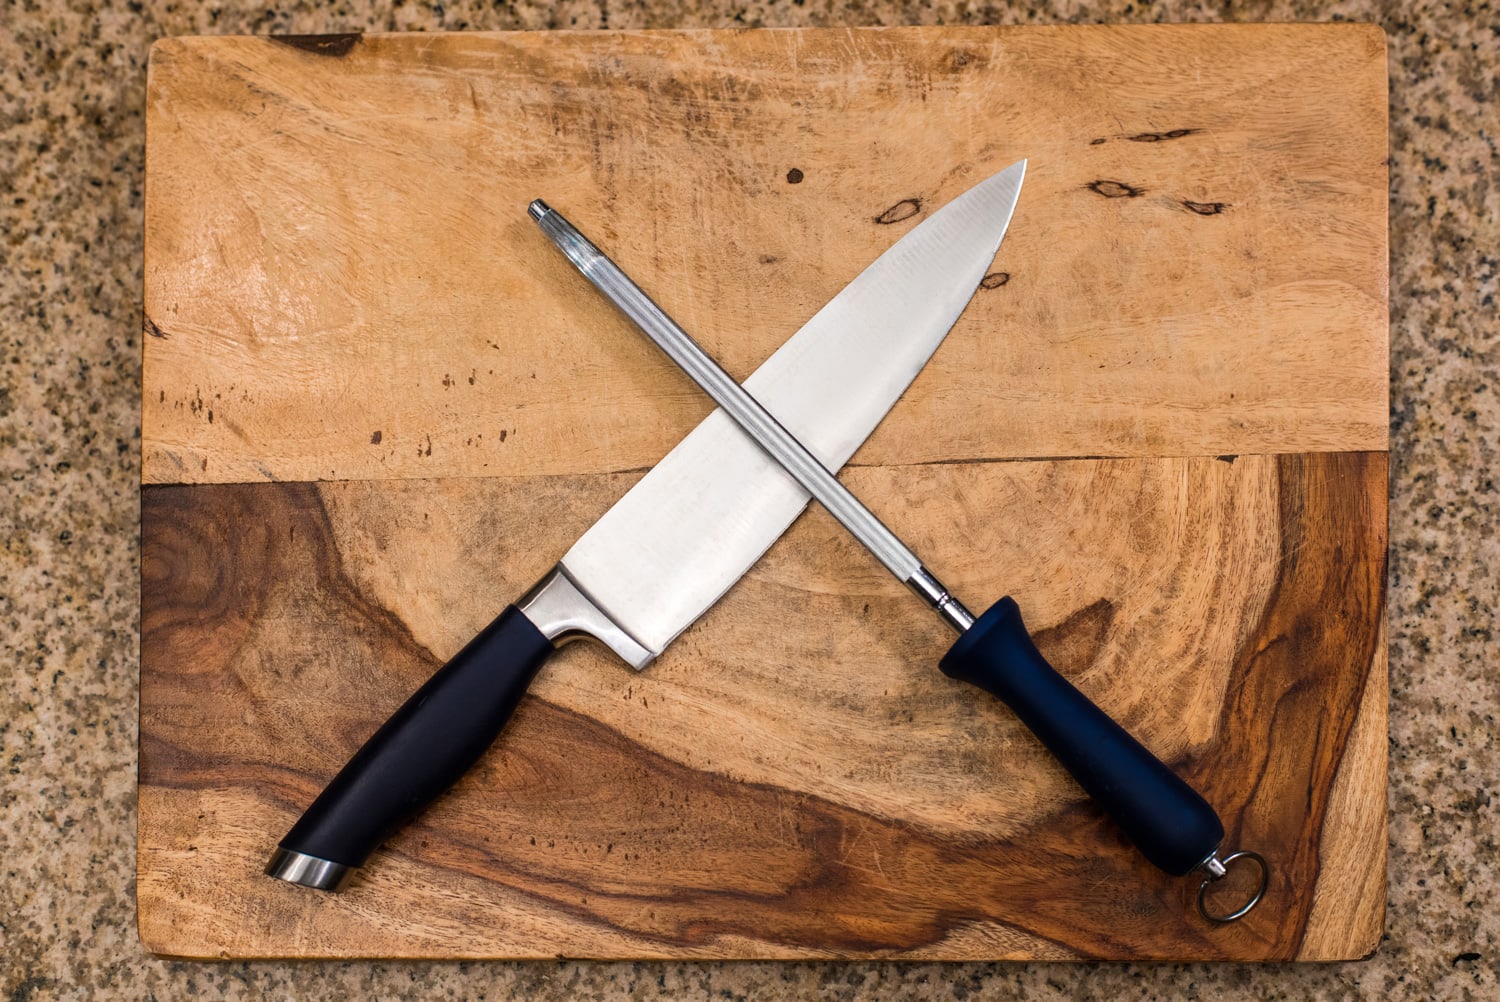 Knife & Sharpener On A Cutting Board